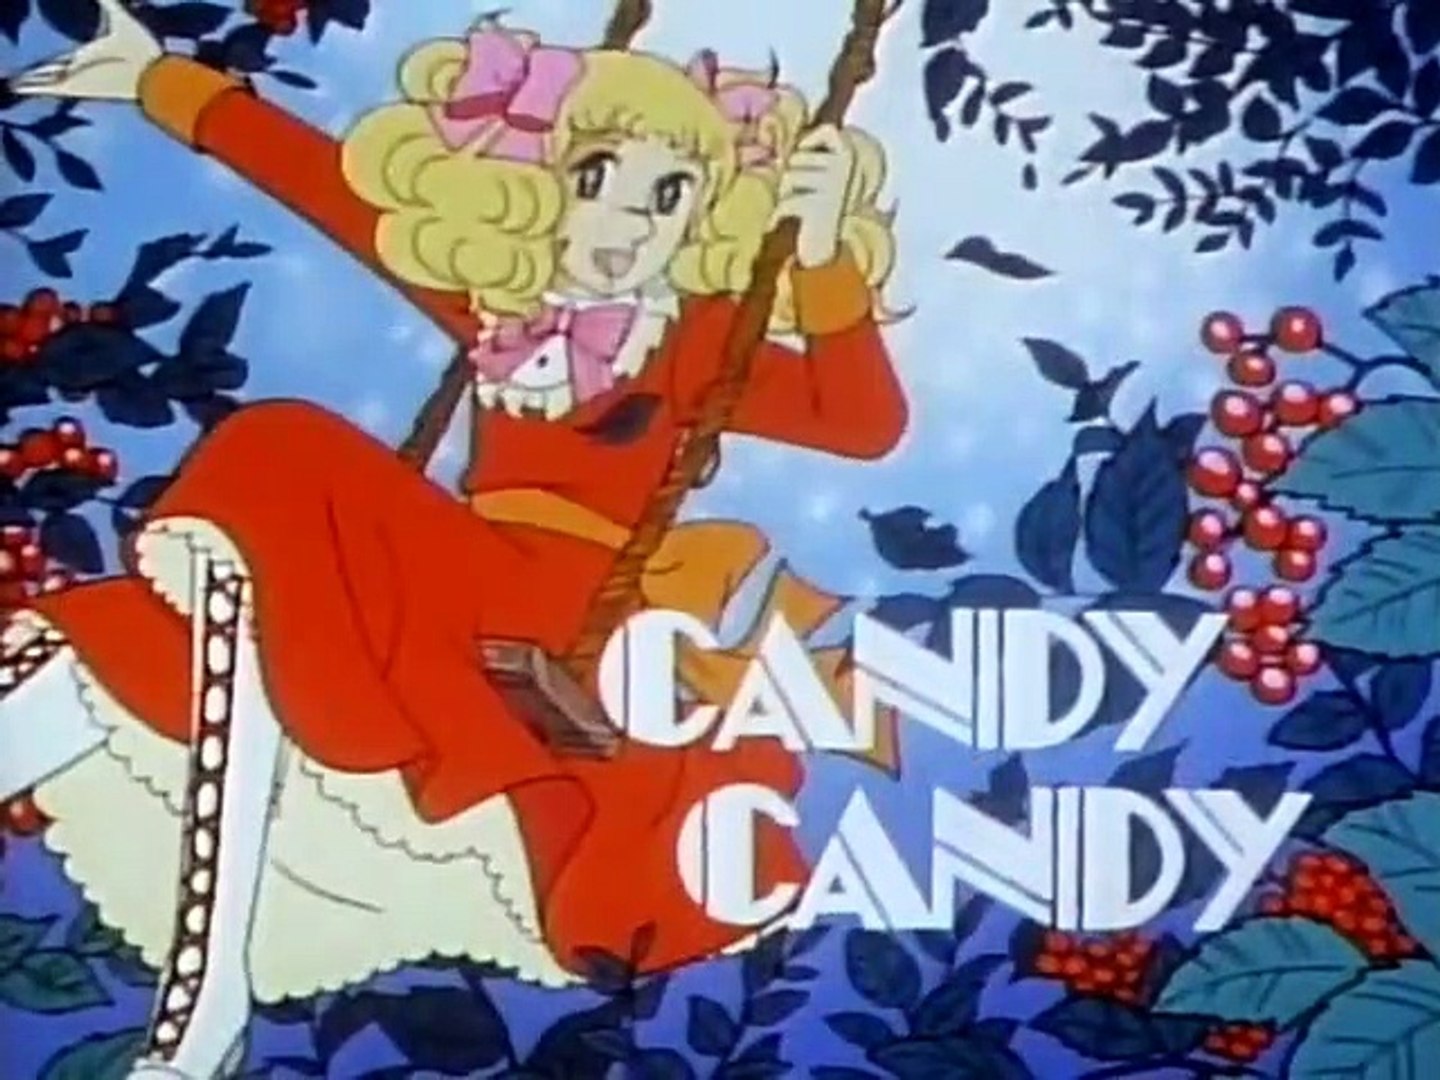 Candy Candy | Un amor embarazoso | Capítulo 110 - Vídeo Dailymotion